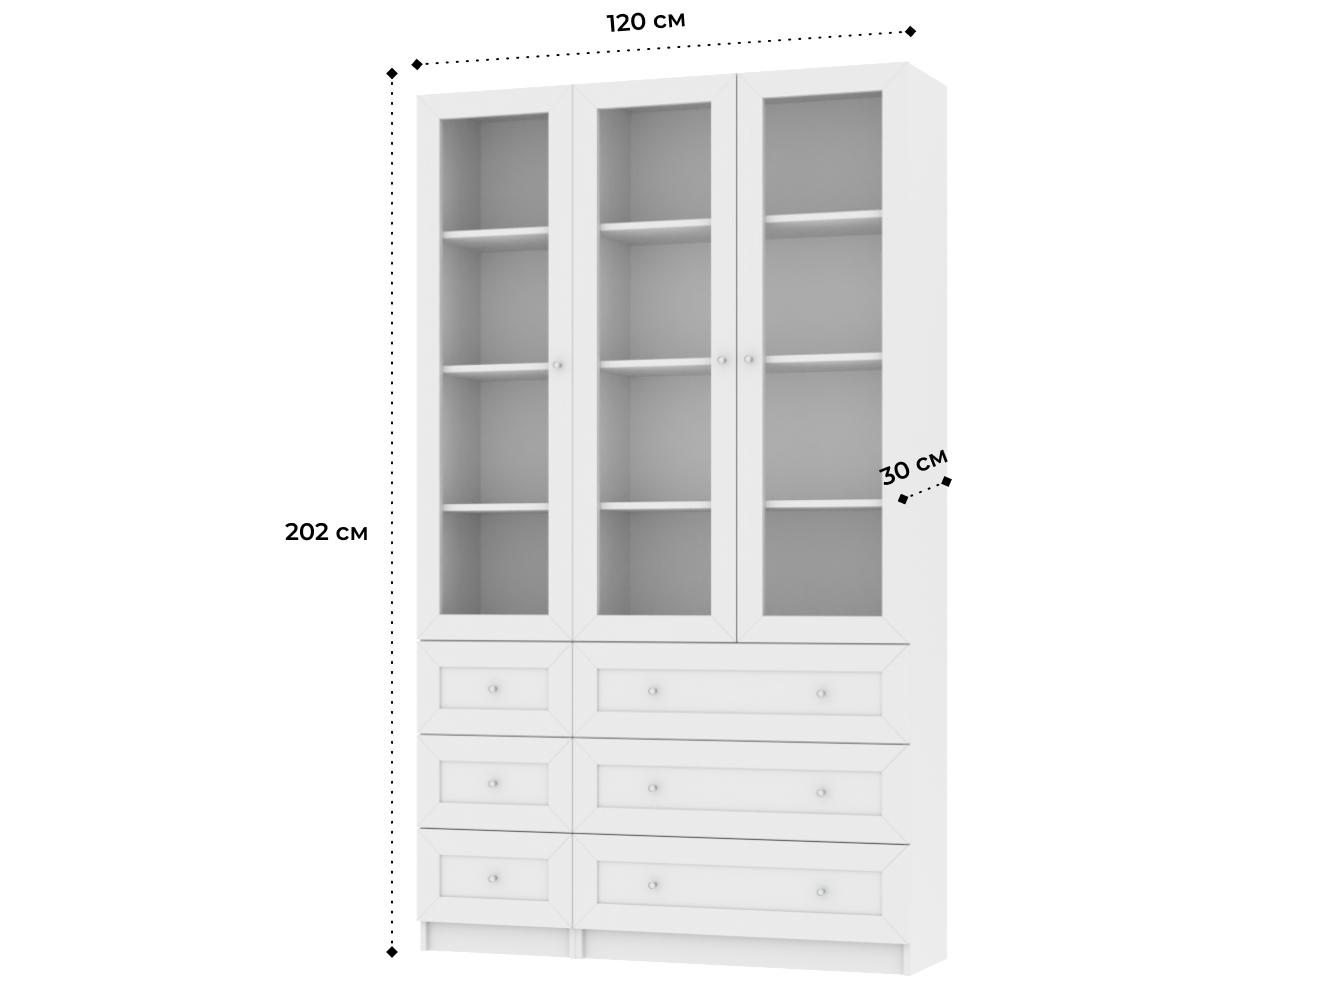  Книжный шкаф Билли 325 white ИКЕА (IKEA) изображение товара